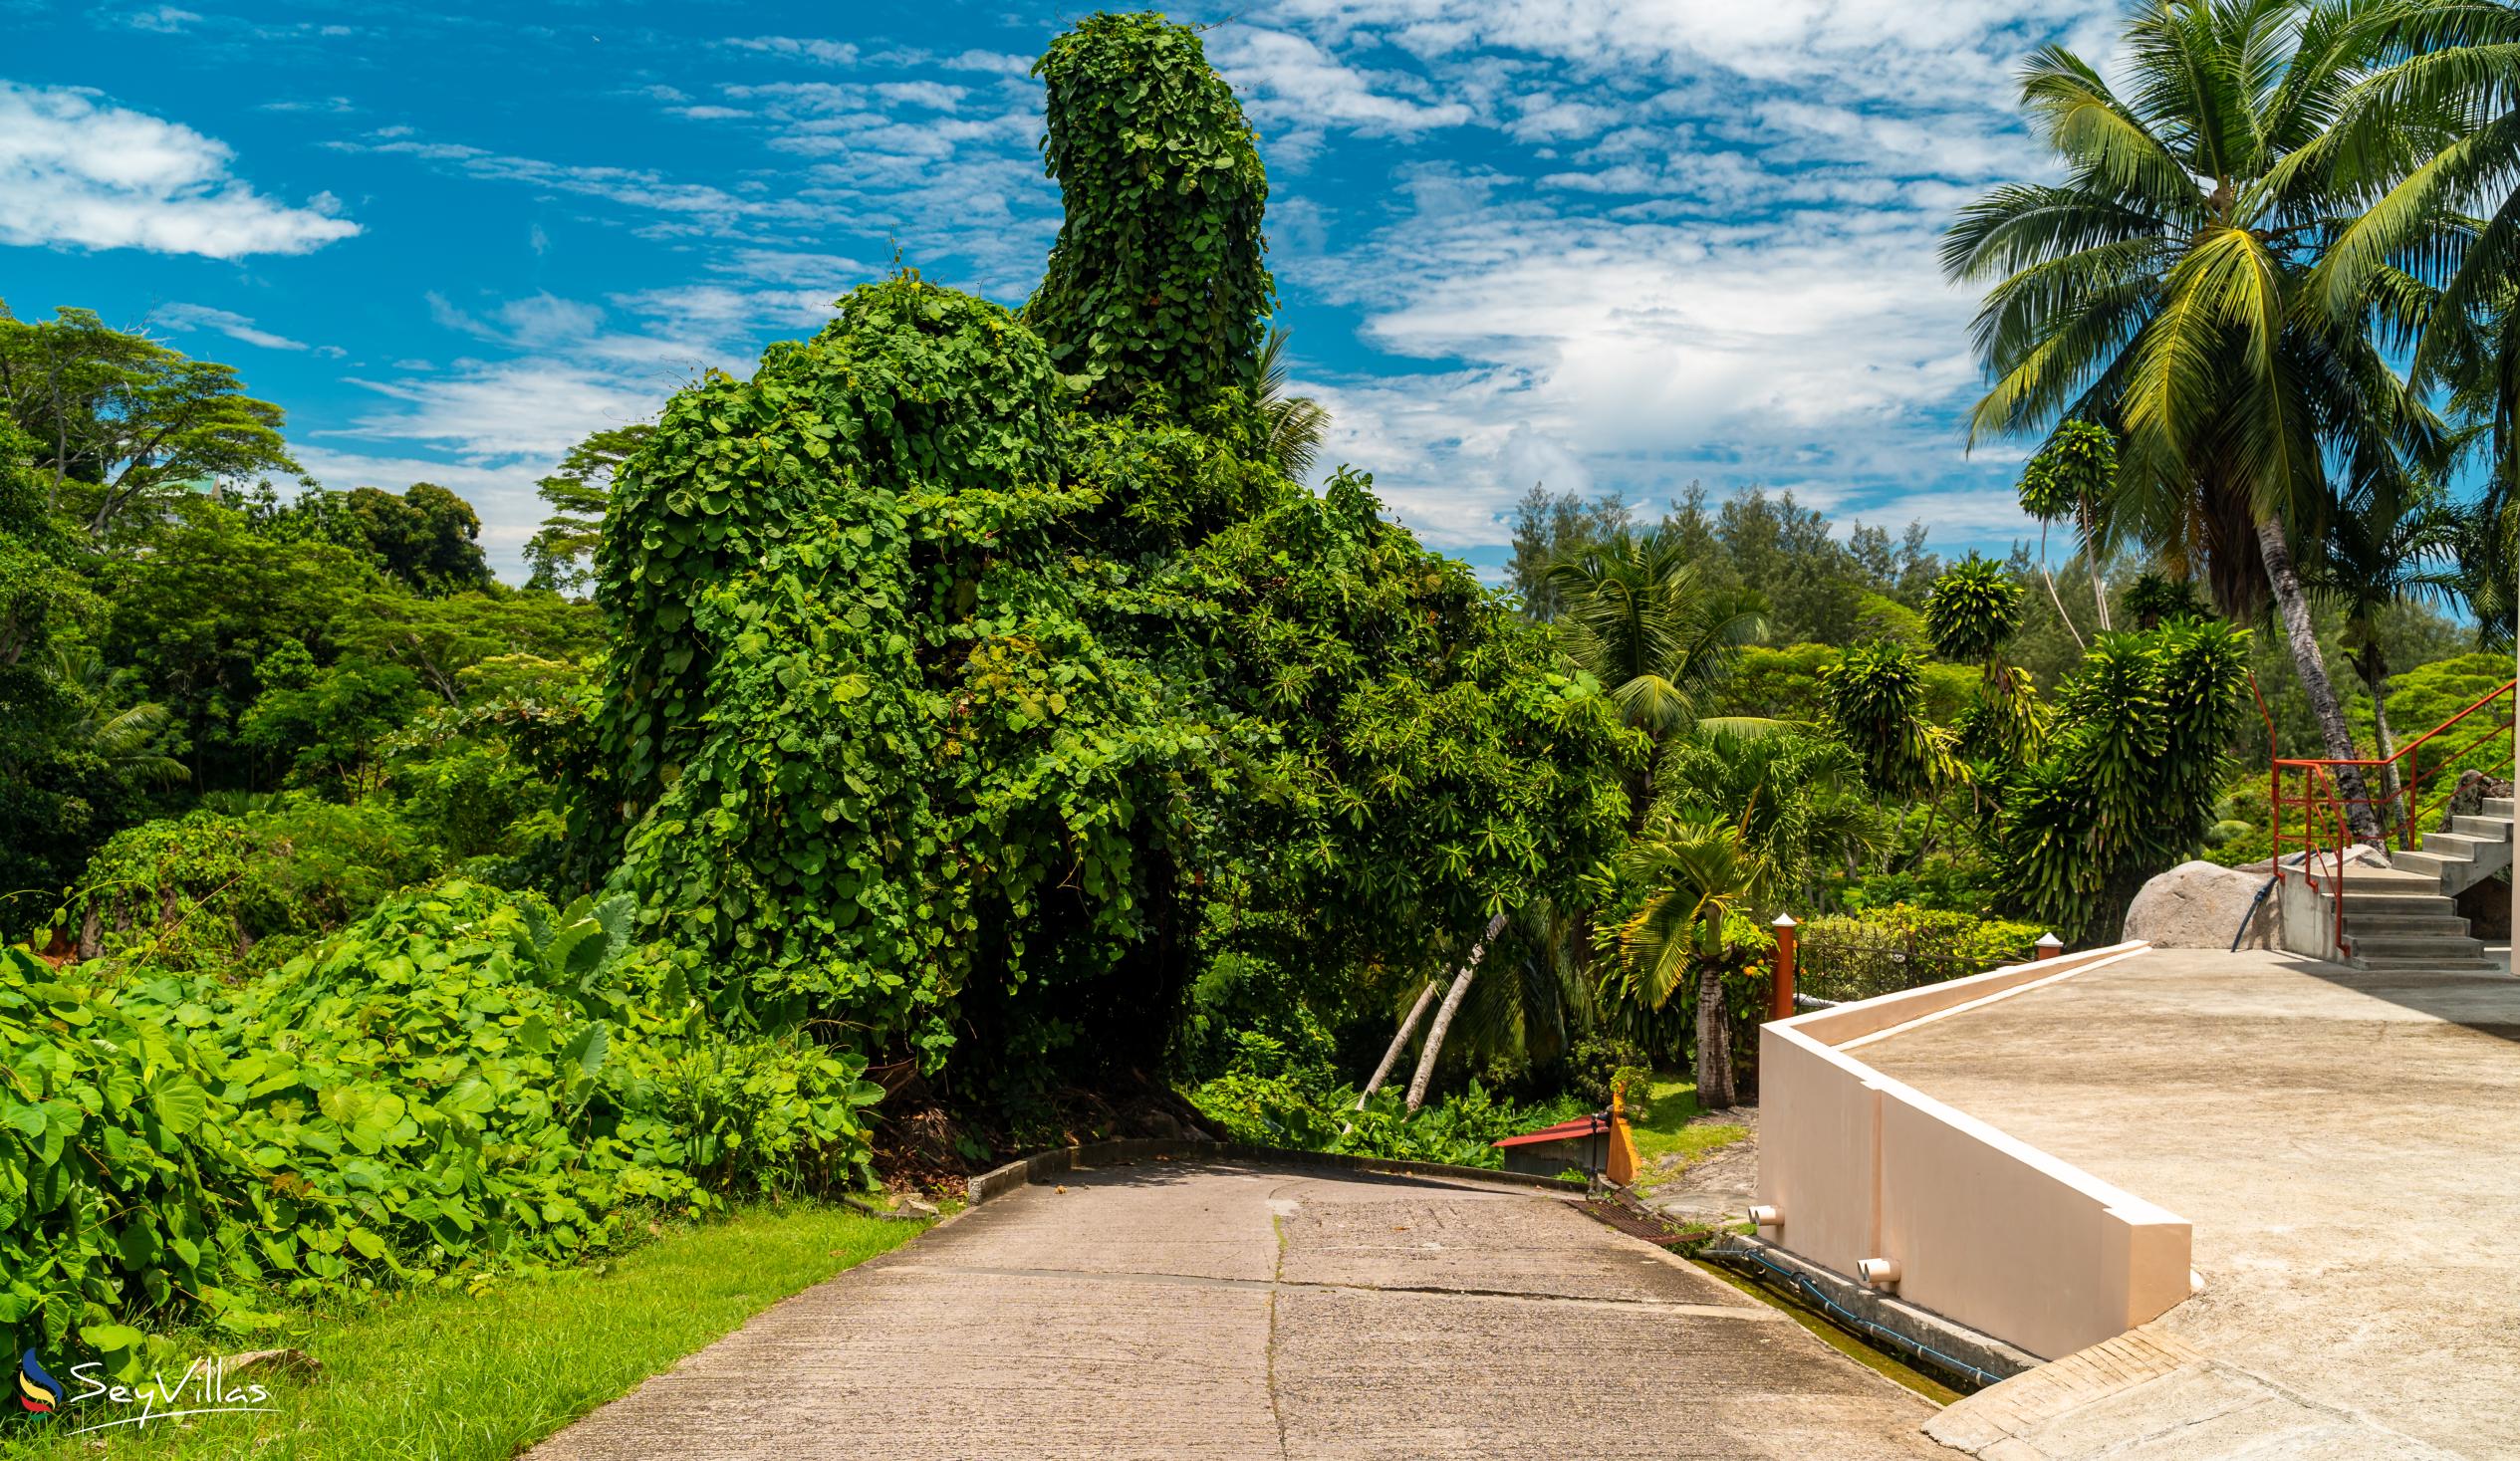 Photo 18: JAIDSS Holiday Apartments - Outdoor area - Mahé (Seychelles)